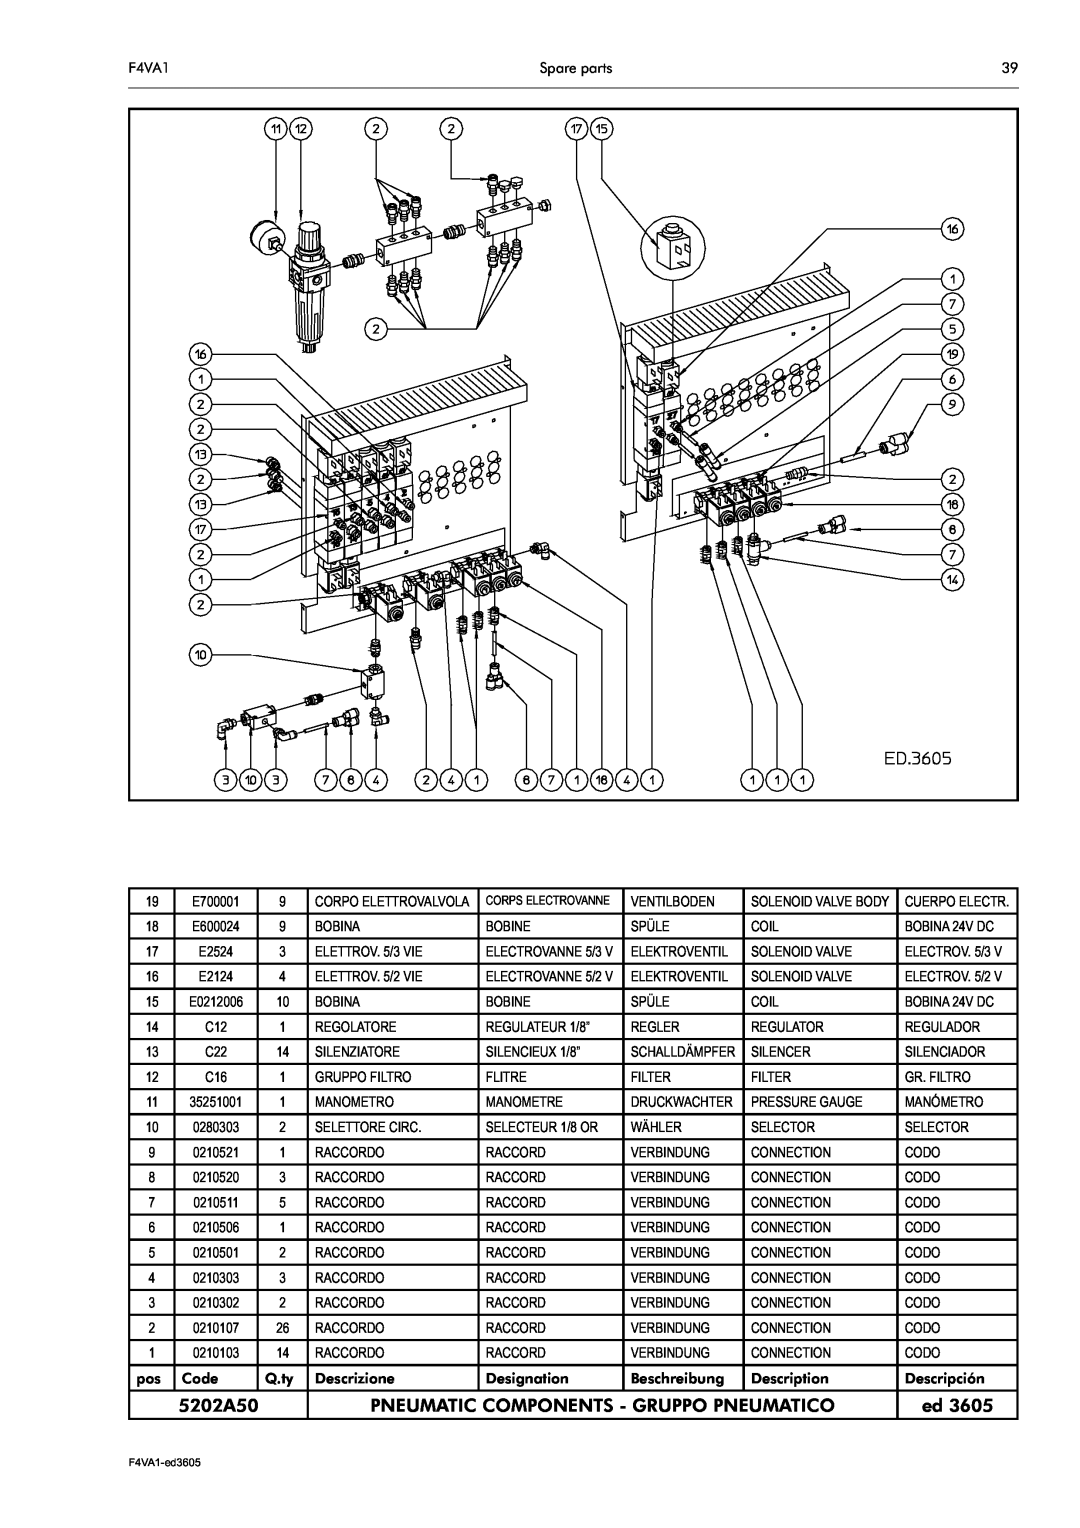 Electrolux F4VA1 manual 5202A50, Pneumatic Components - Gruppo Pneumatico 